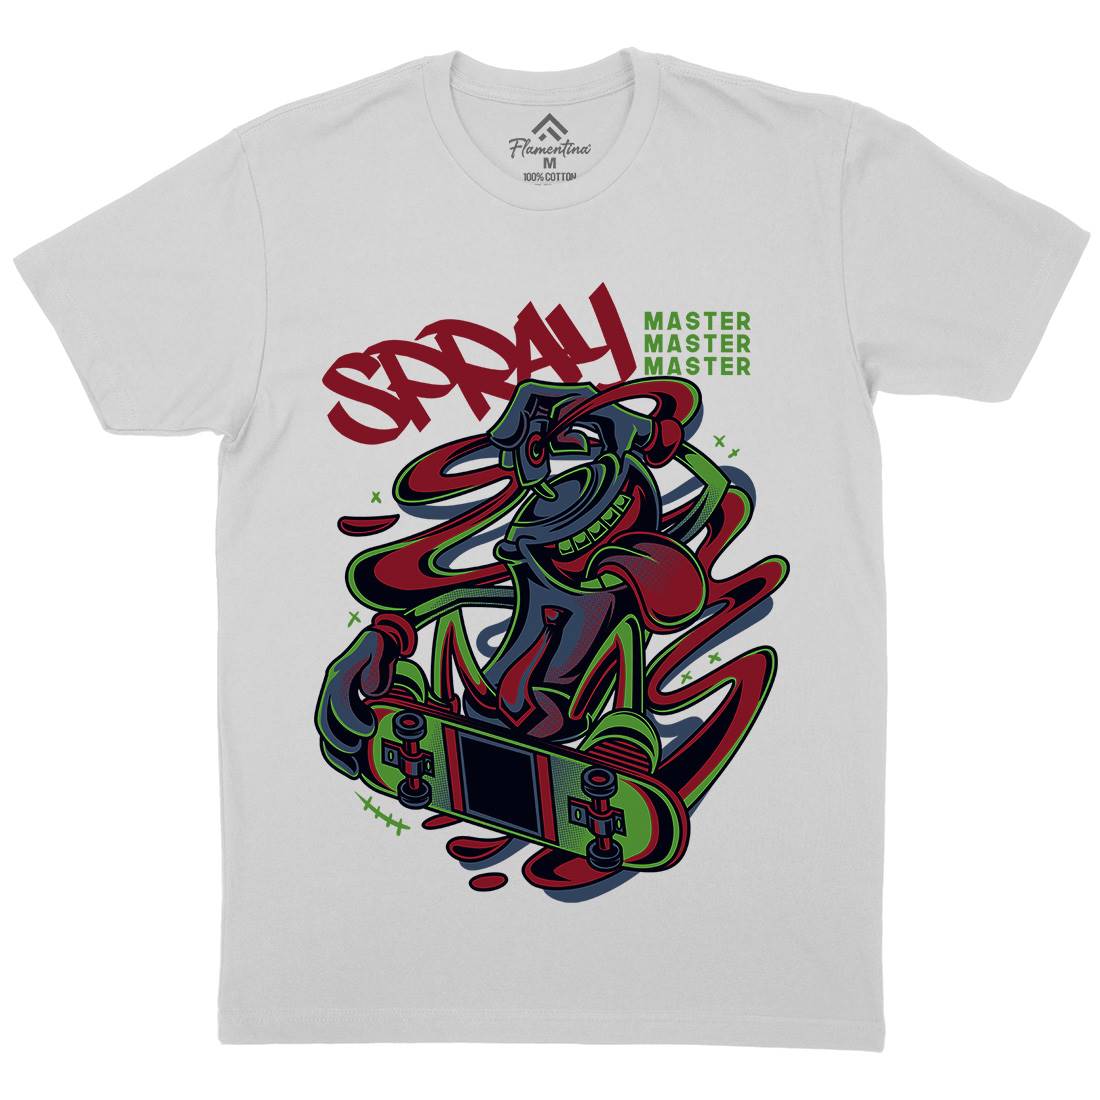 Spray Master Mens Crew Neck T-Shirt Skate D832